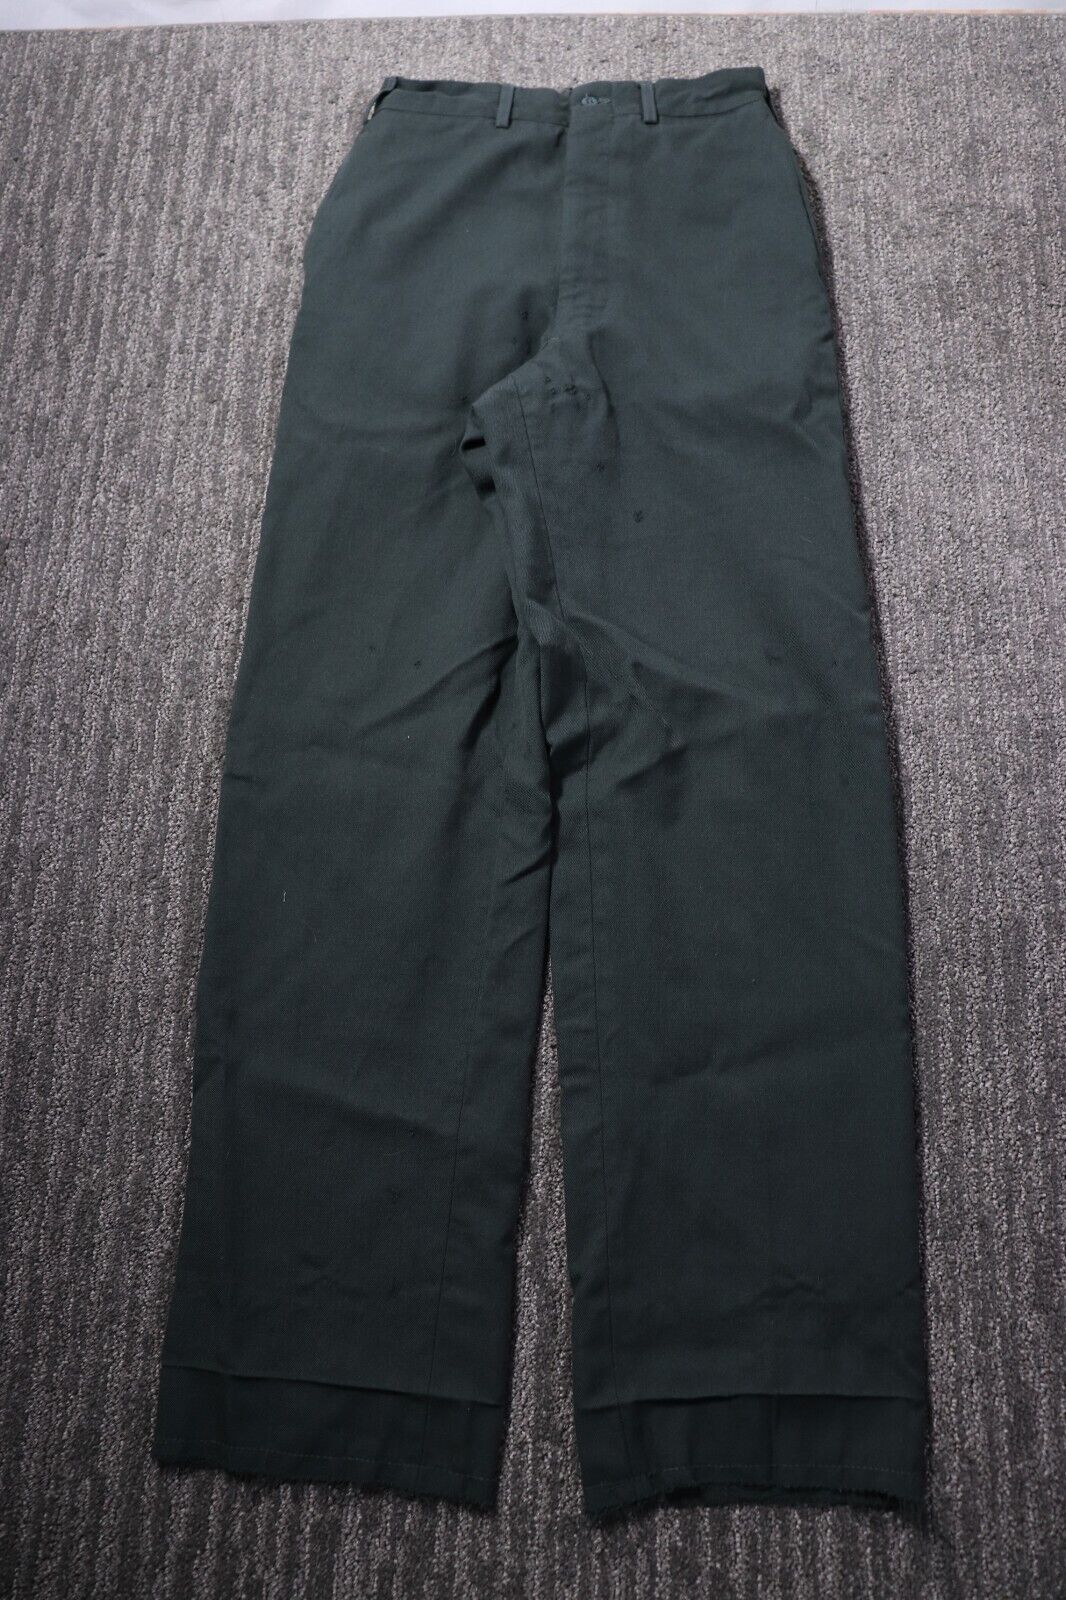 Vintage WW2 Green Military Trousers Men 28x33 Pants HAS WEAR